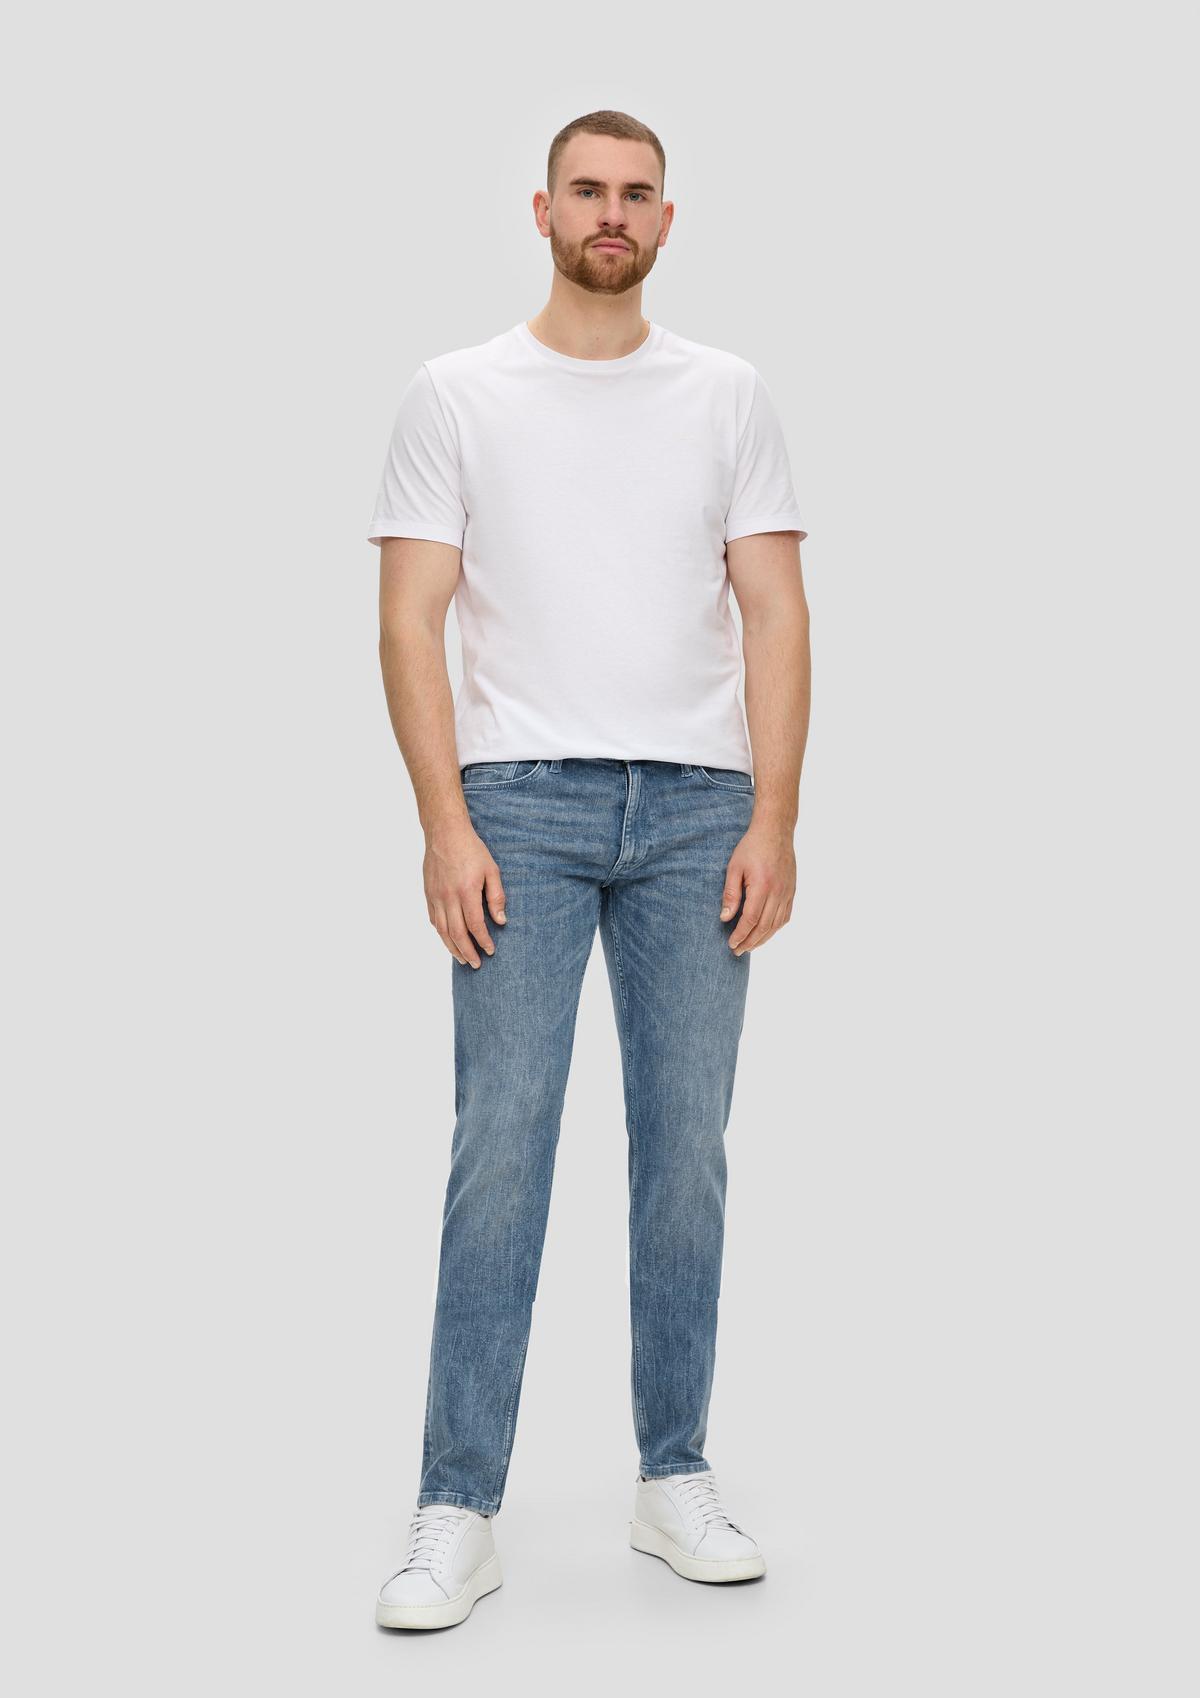 s.Oliver Jeans York / regular fit / mid rise / straight leg